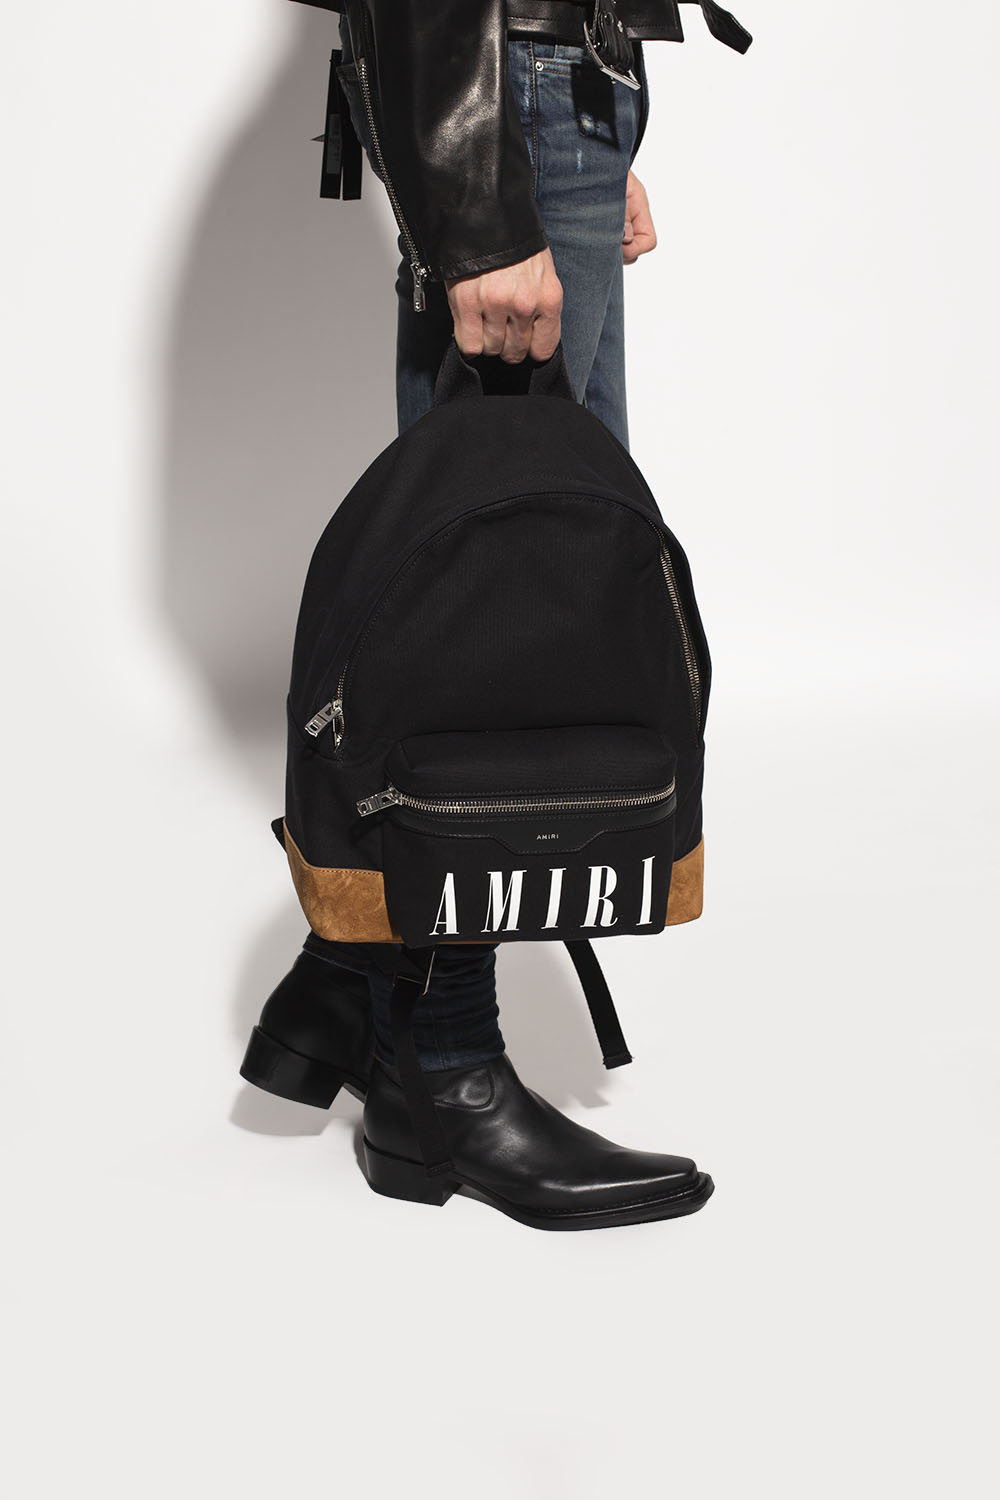 Amiri Thetis vegan leather bag